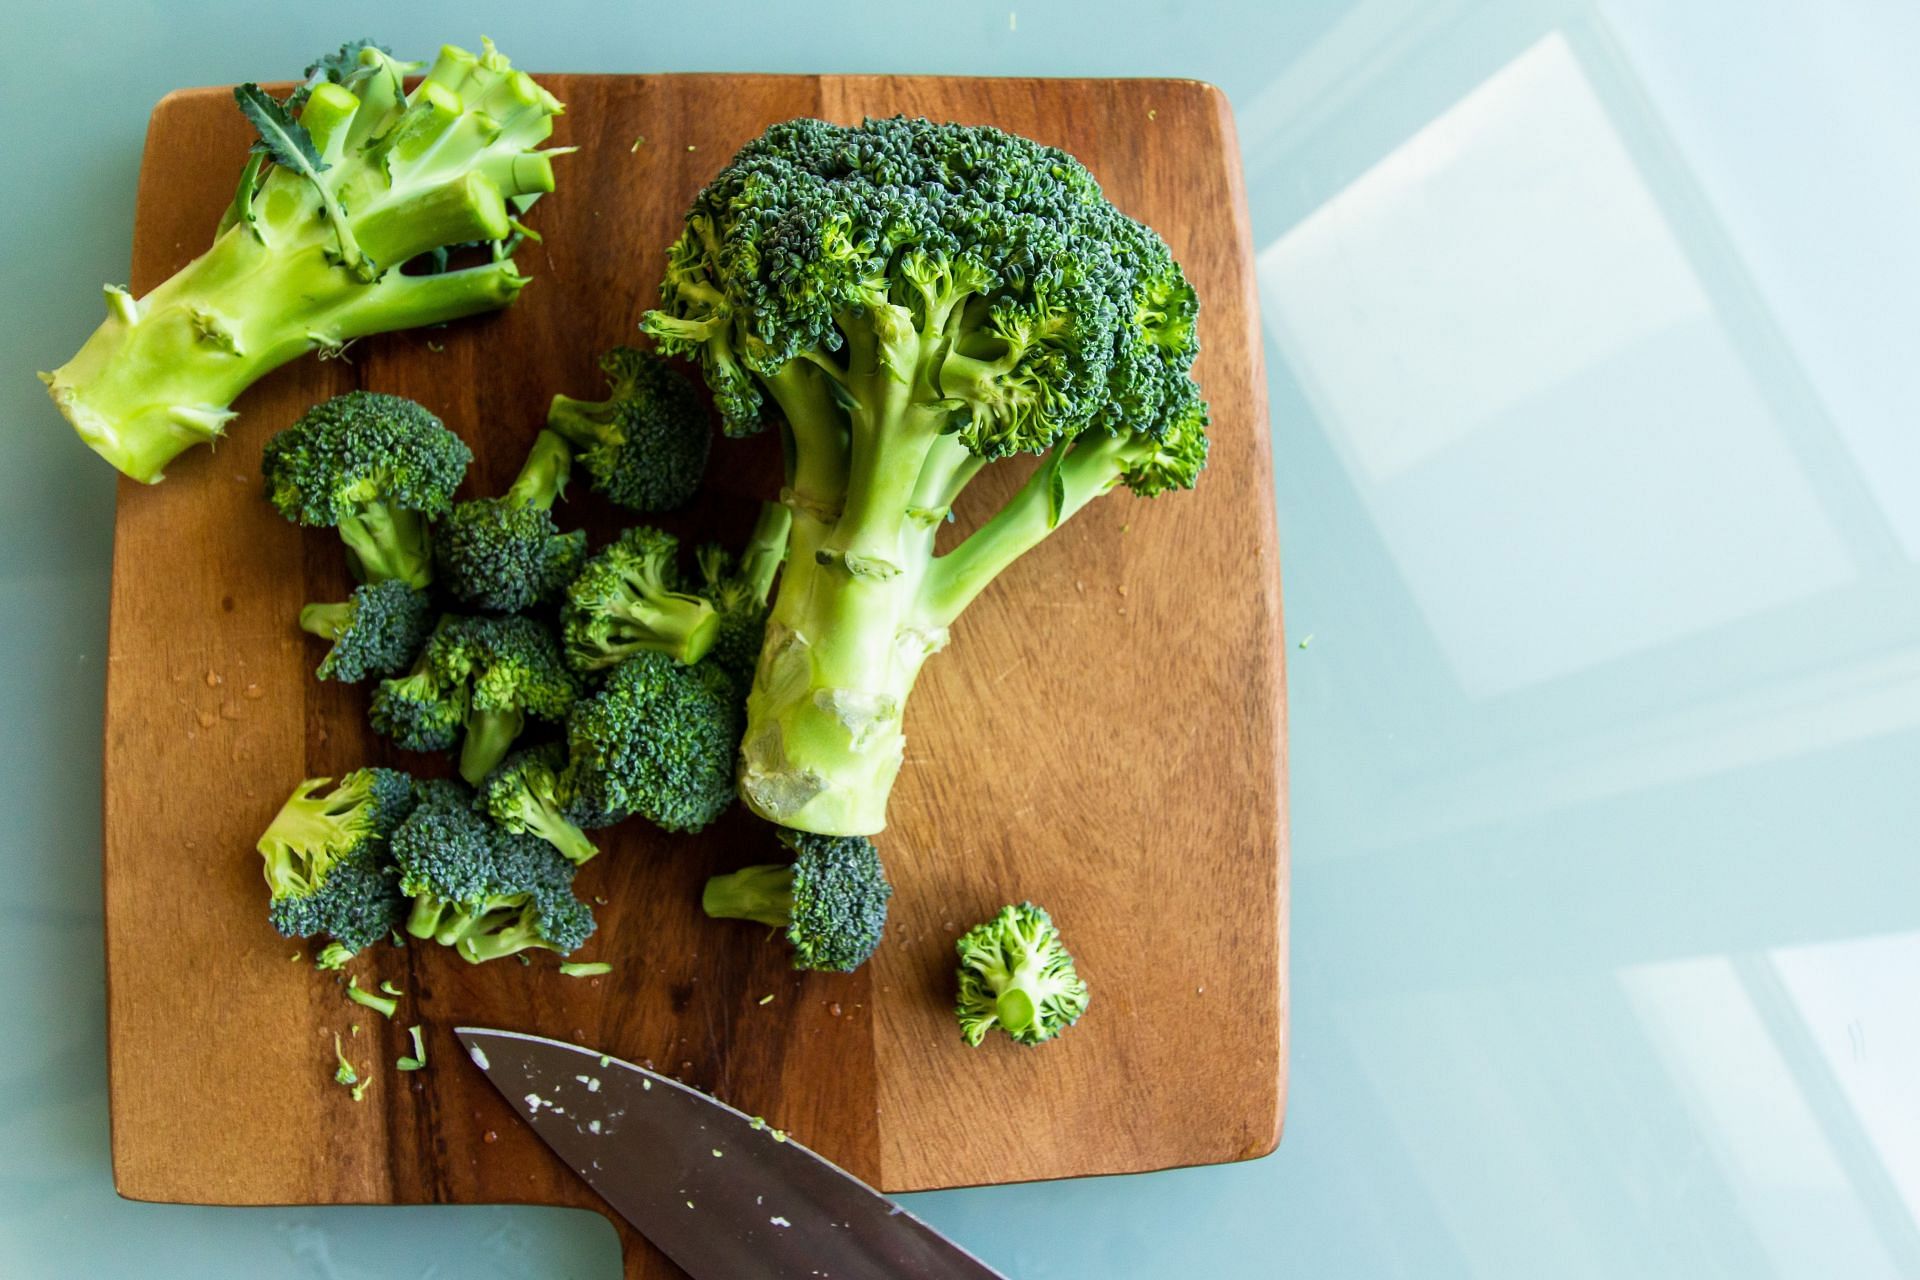 Low-carb vegetables help prevent blood sugar spikes. (Image via Unsplash/Louis Hansel)